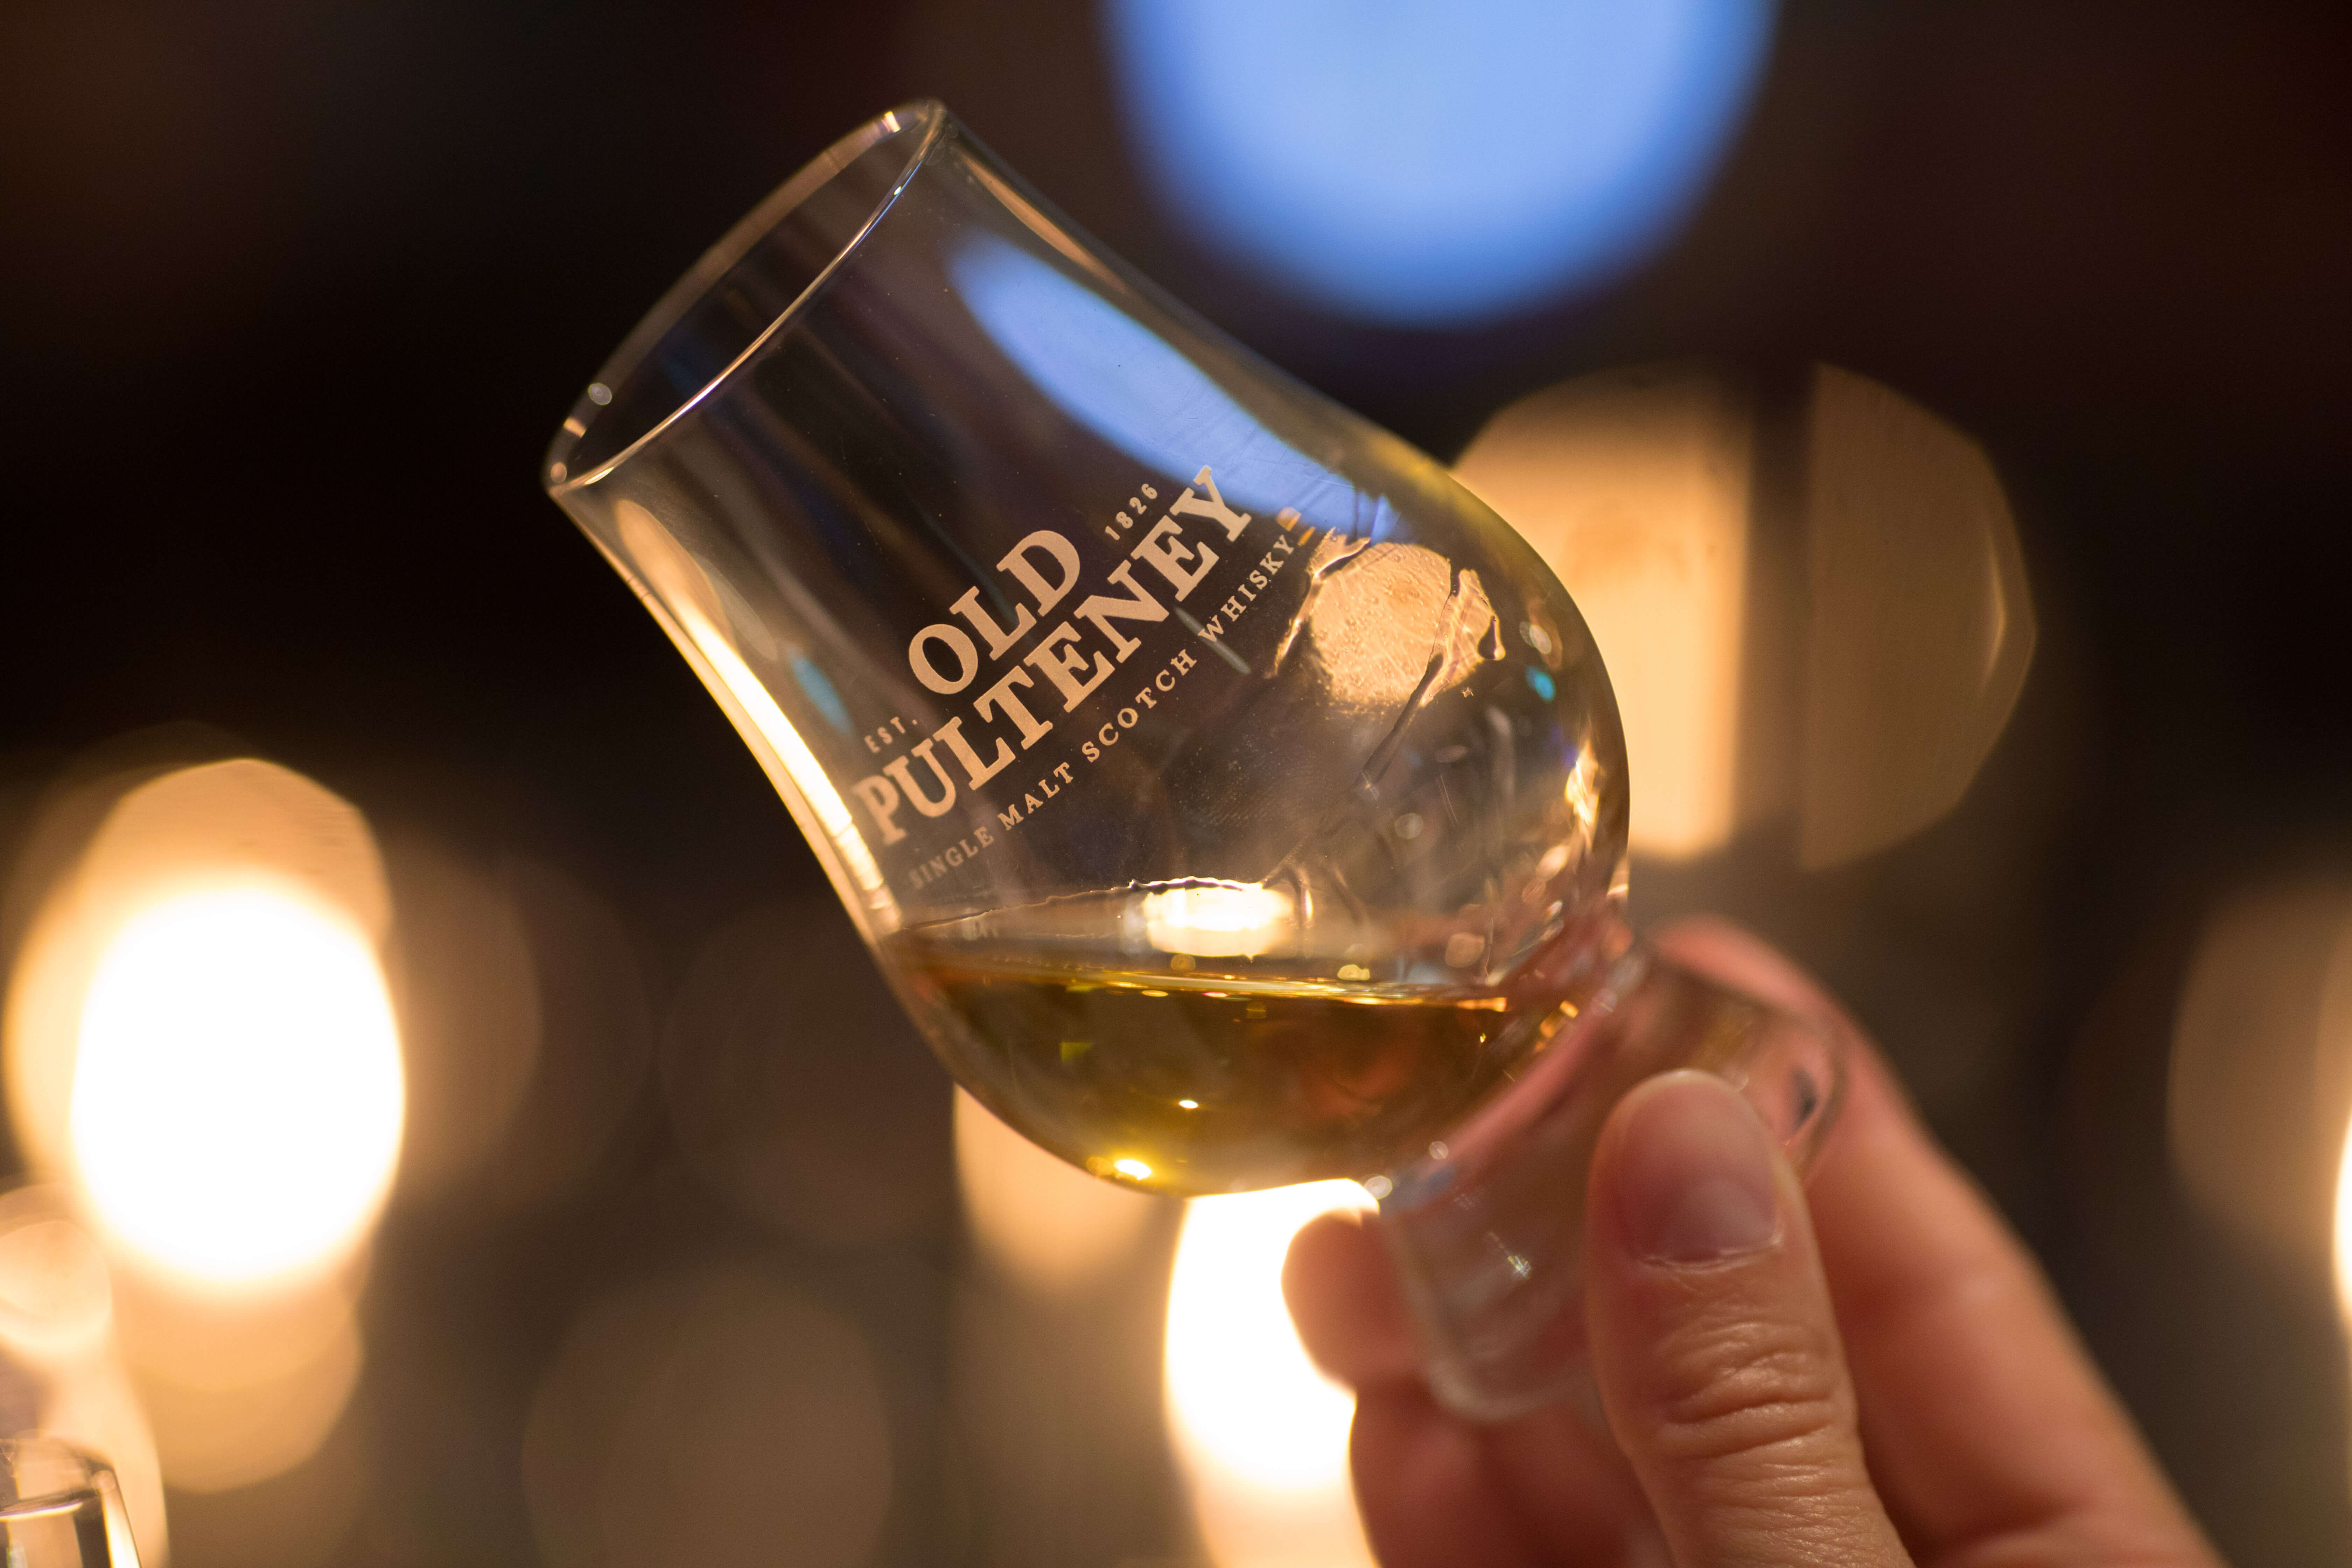 New Traveller Exclusive Whiskies Join Old Pulteney’s Fleet